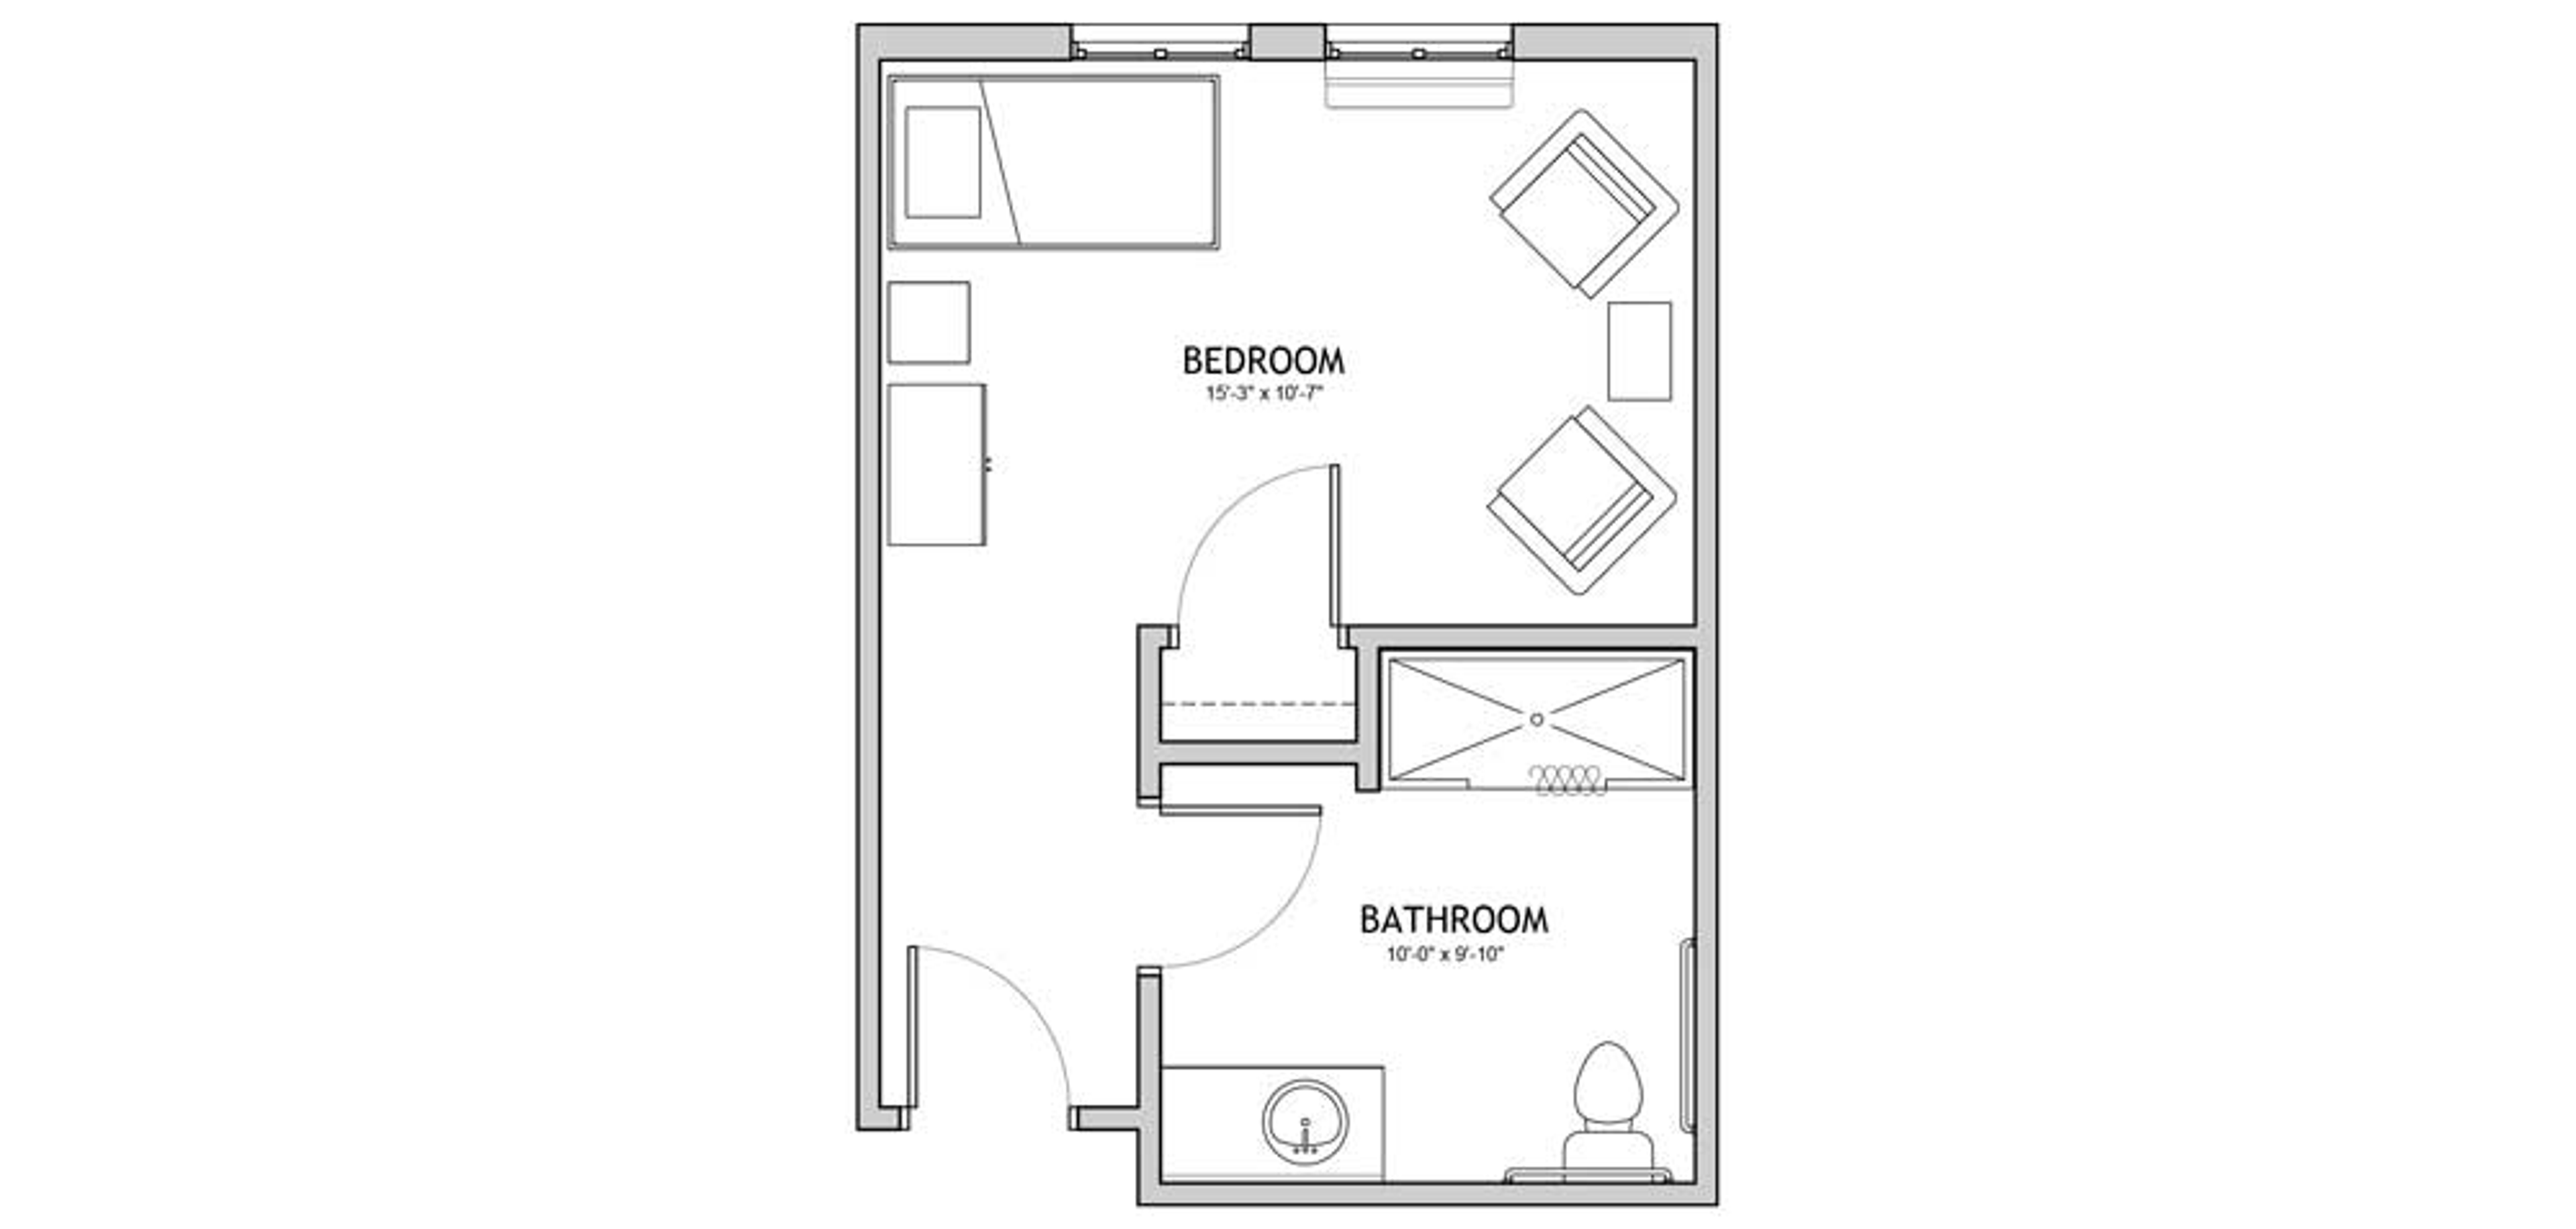 Floorplan - The Auberge at Cedar Park - 1 bed, 1 bath, 338 sq. ft. Memory Care